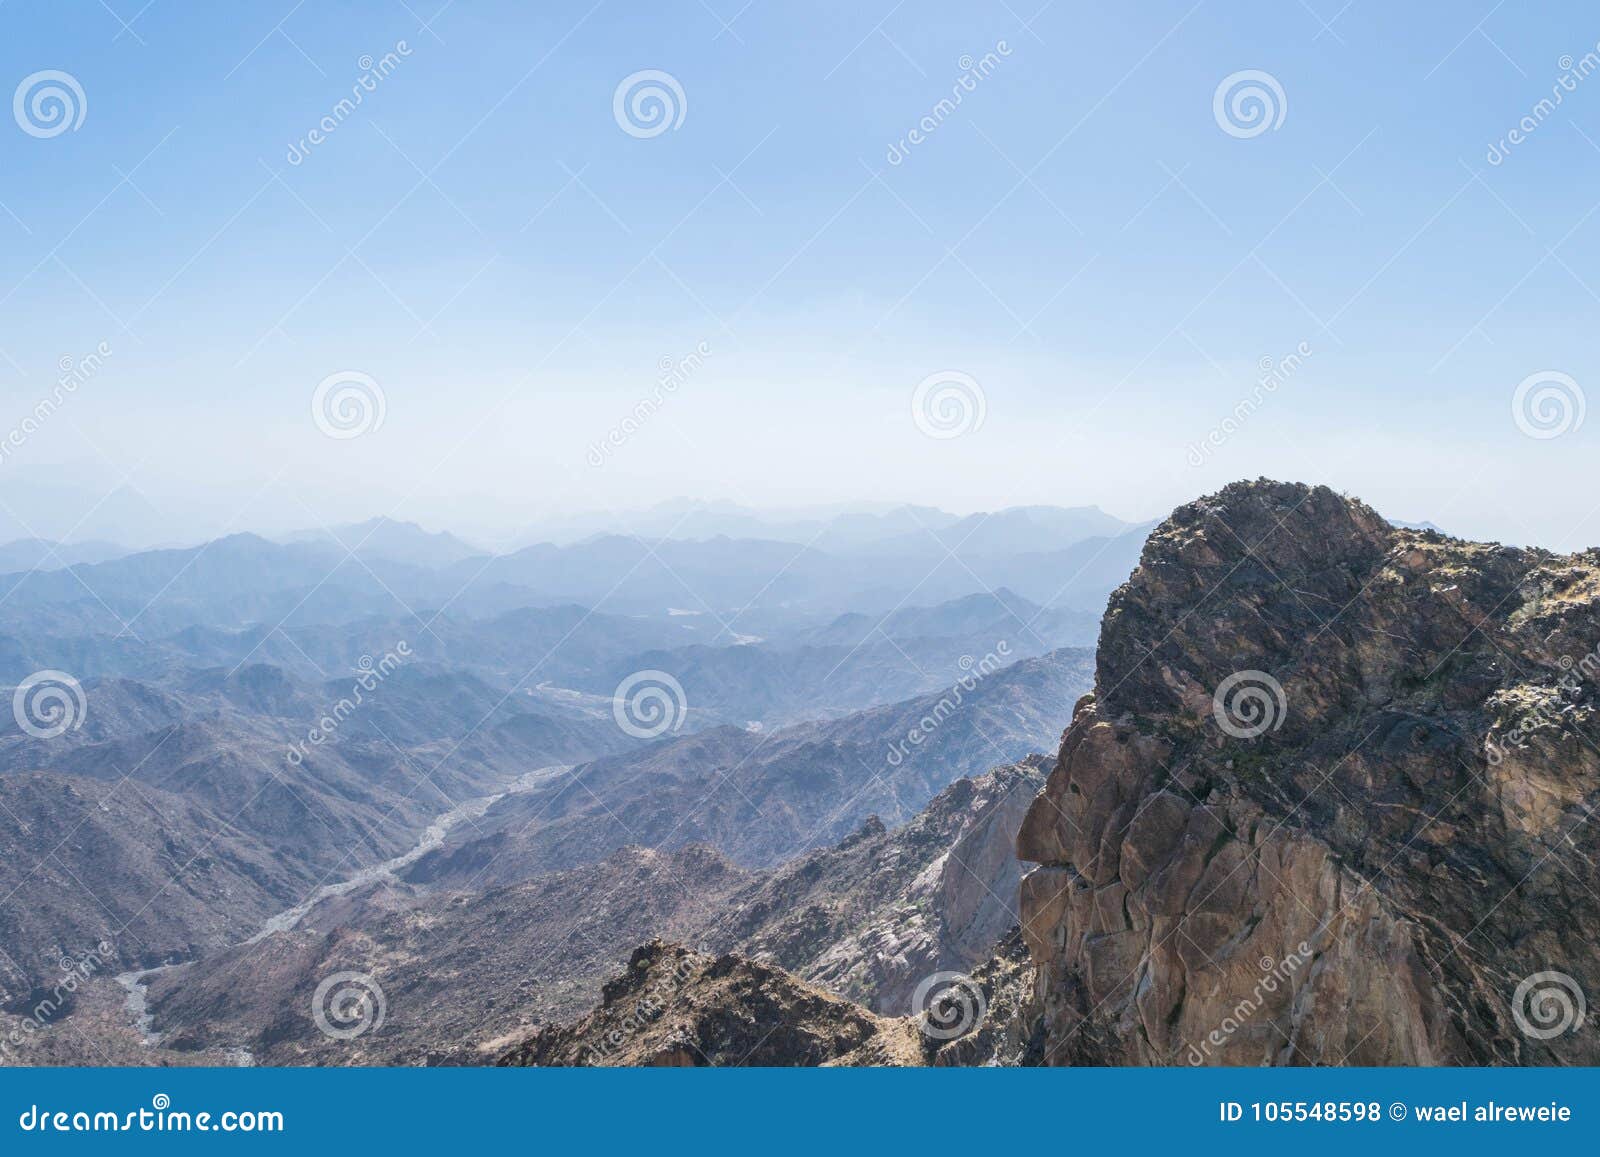 al hada mountain in taif city, saudi arabia with beautiful view of mountains and al hada road inbetween the mountains.